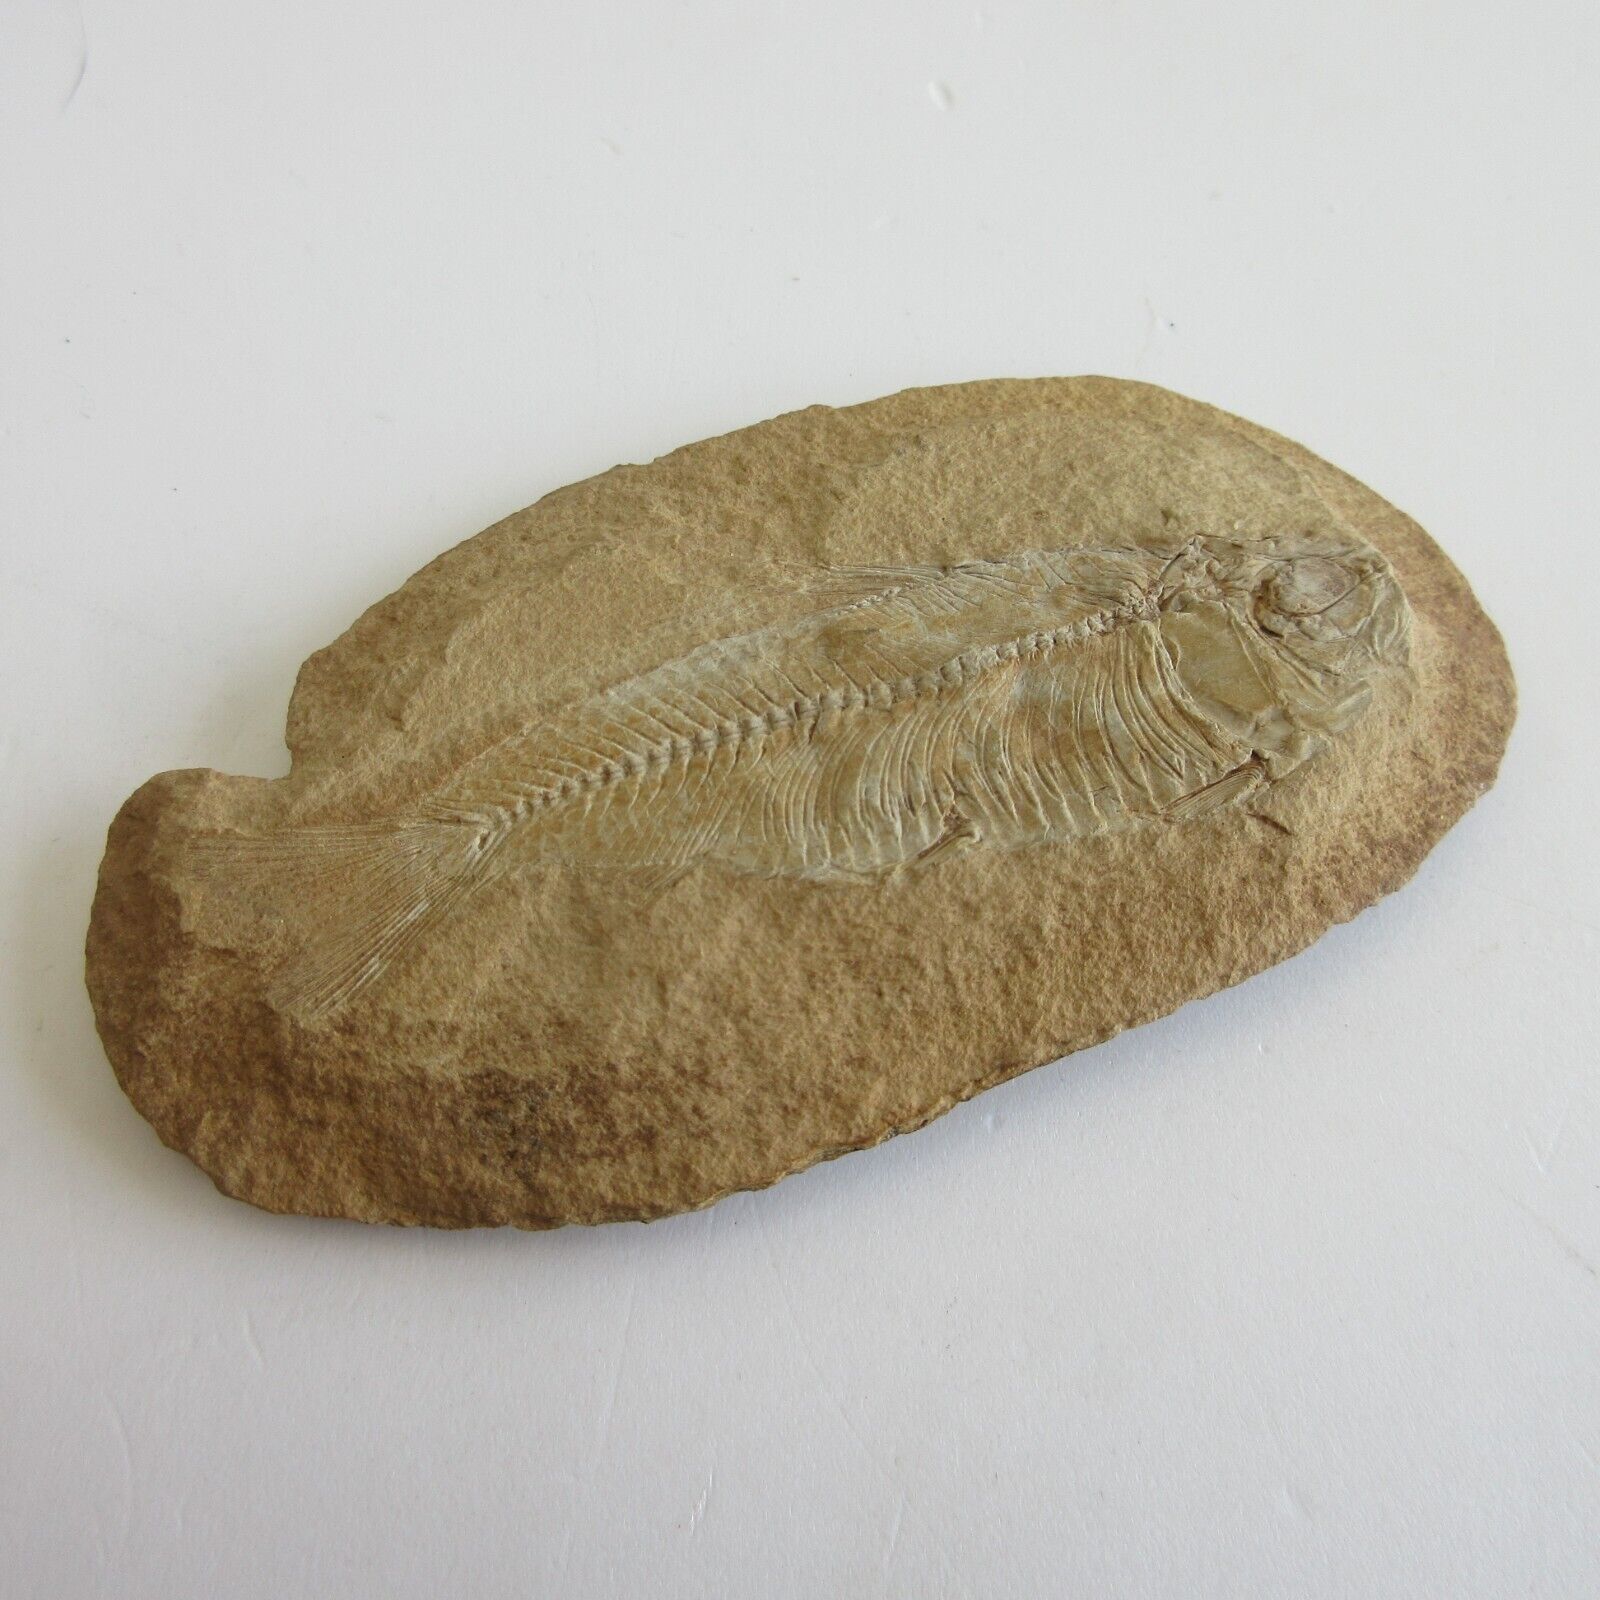 prehistoric fish fossil - stone art